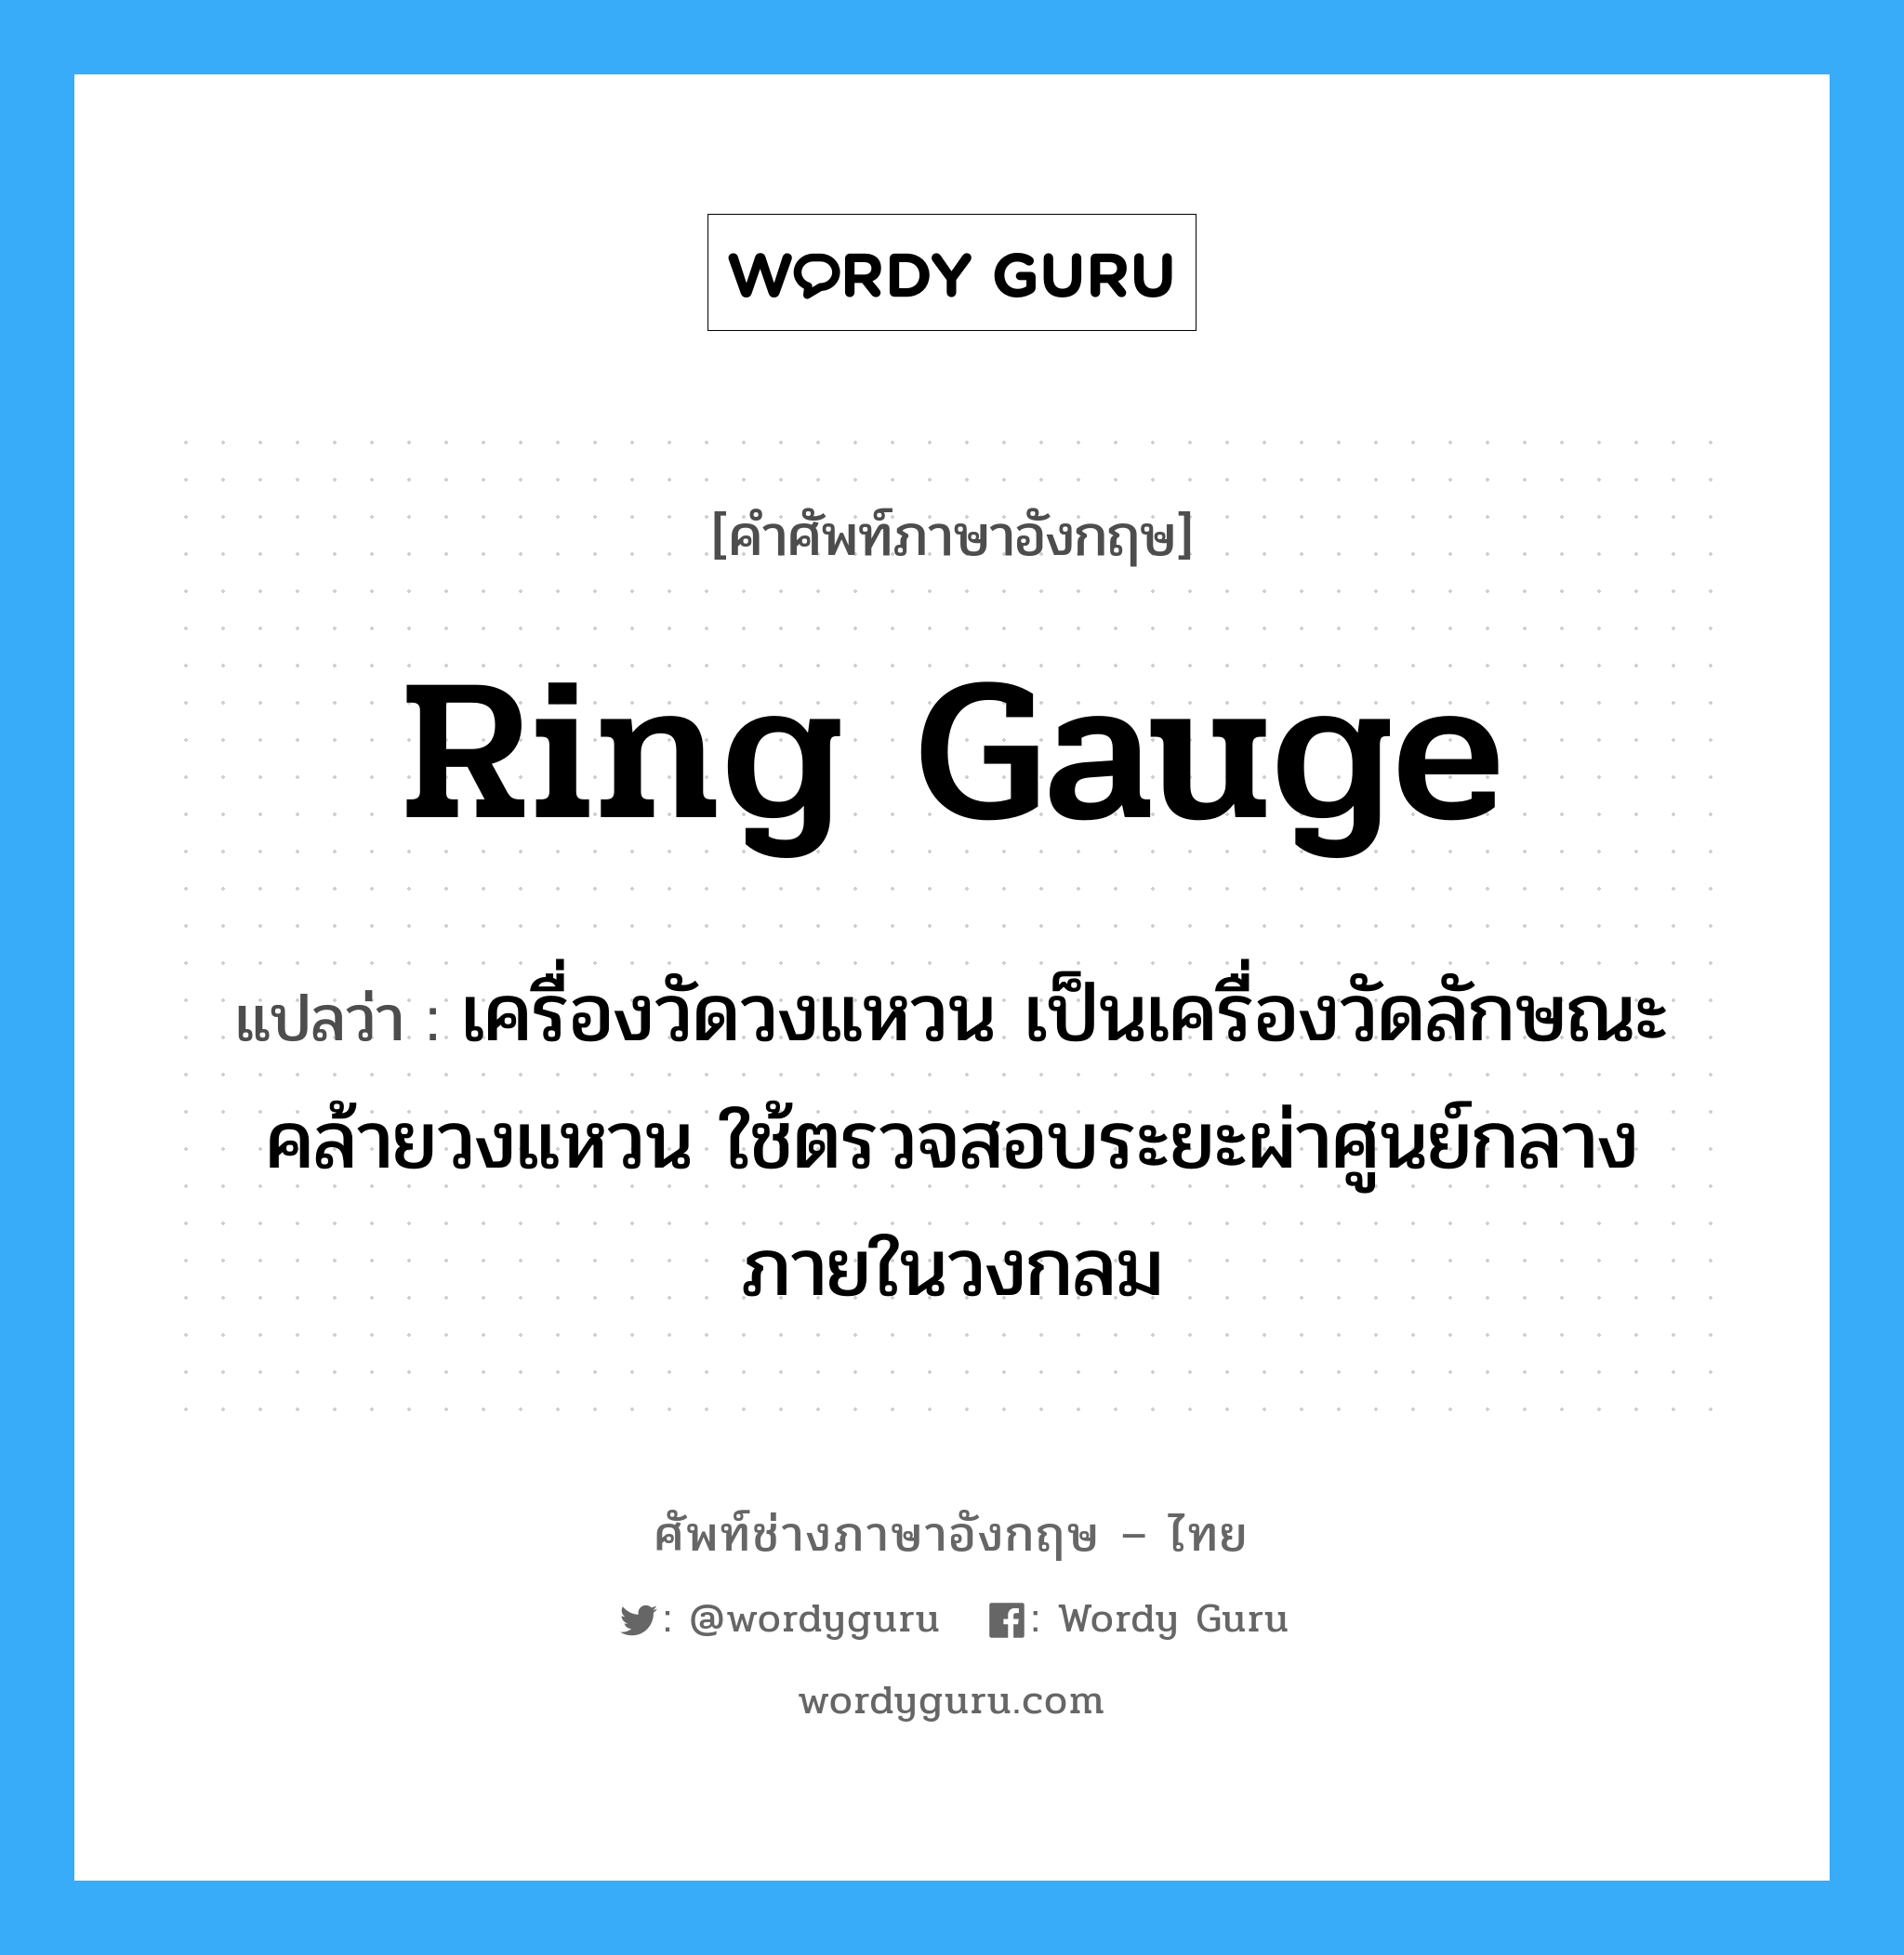 ring gauge แปลว่า?, คำศัพท์ช่างภาษาอังกฤษ - ไทย ring gauge คำศัพท์ภาษาอังกฤษ ring gauge แปลว่า เครื่องวัดวงแหวน เป็นเครื่องวัดลักษณะคล้ายวงแหวน ใช้ตรวจสอบระยะผ่าศูนย์กลางภายในวงกลม